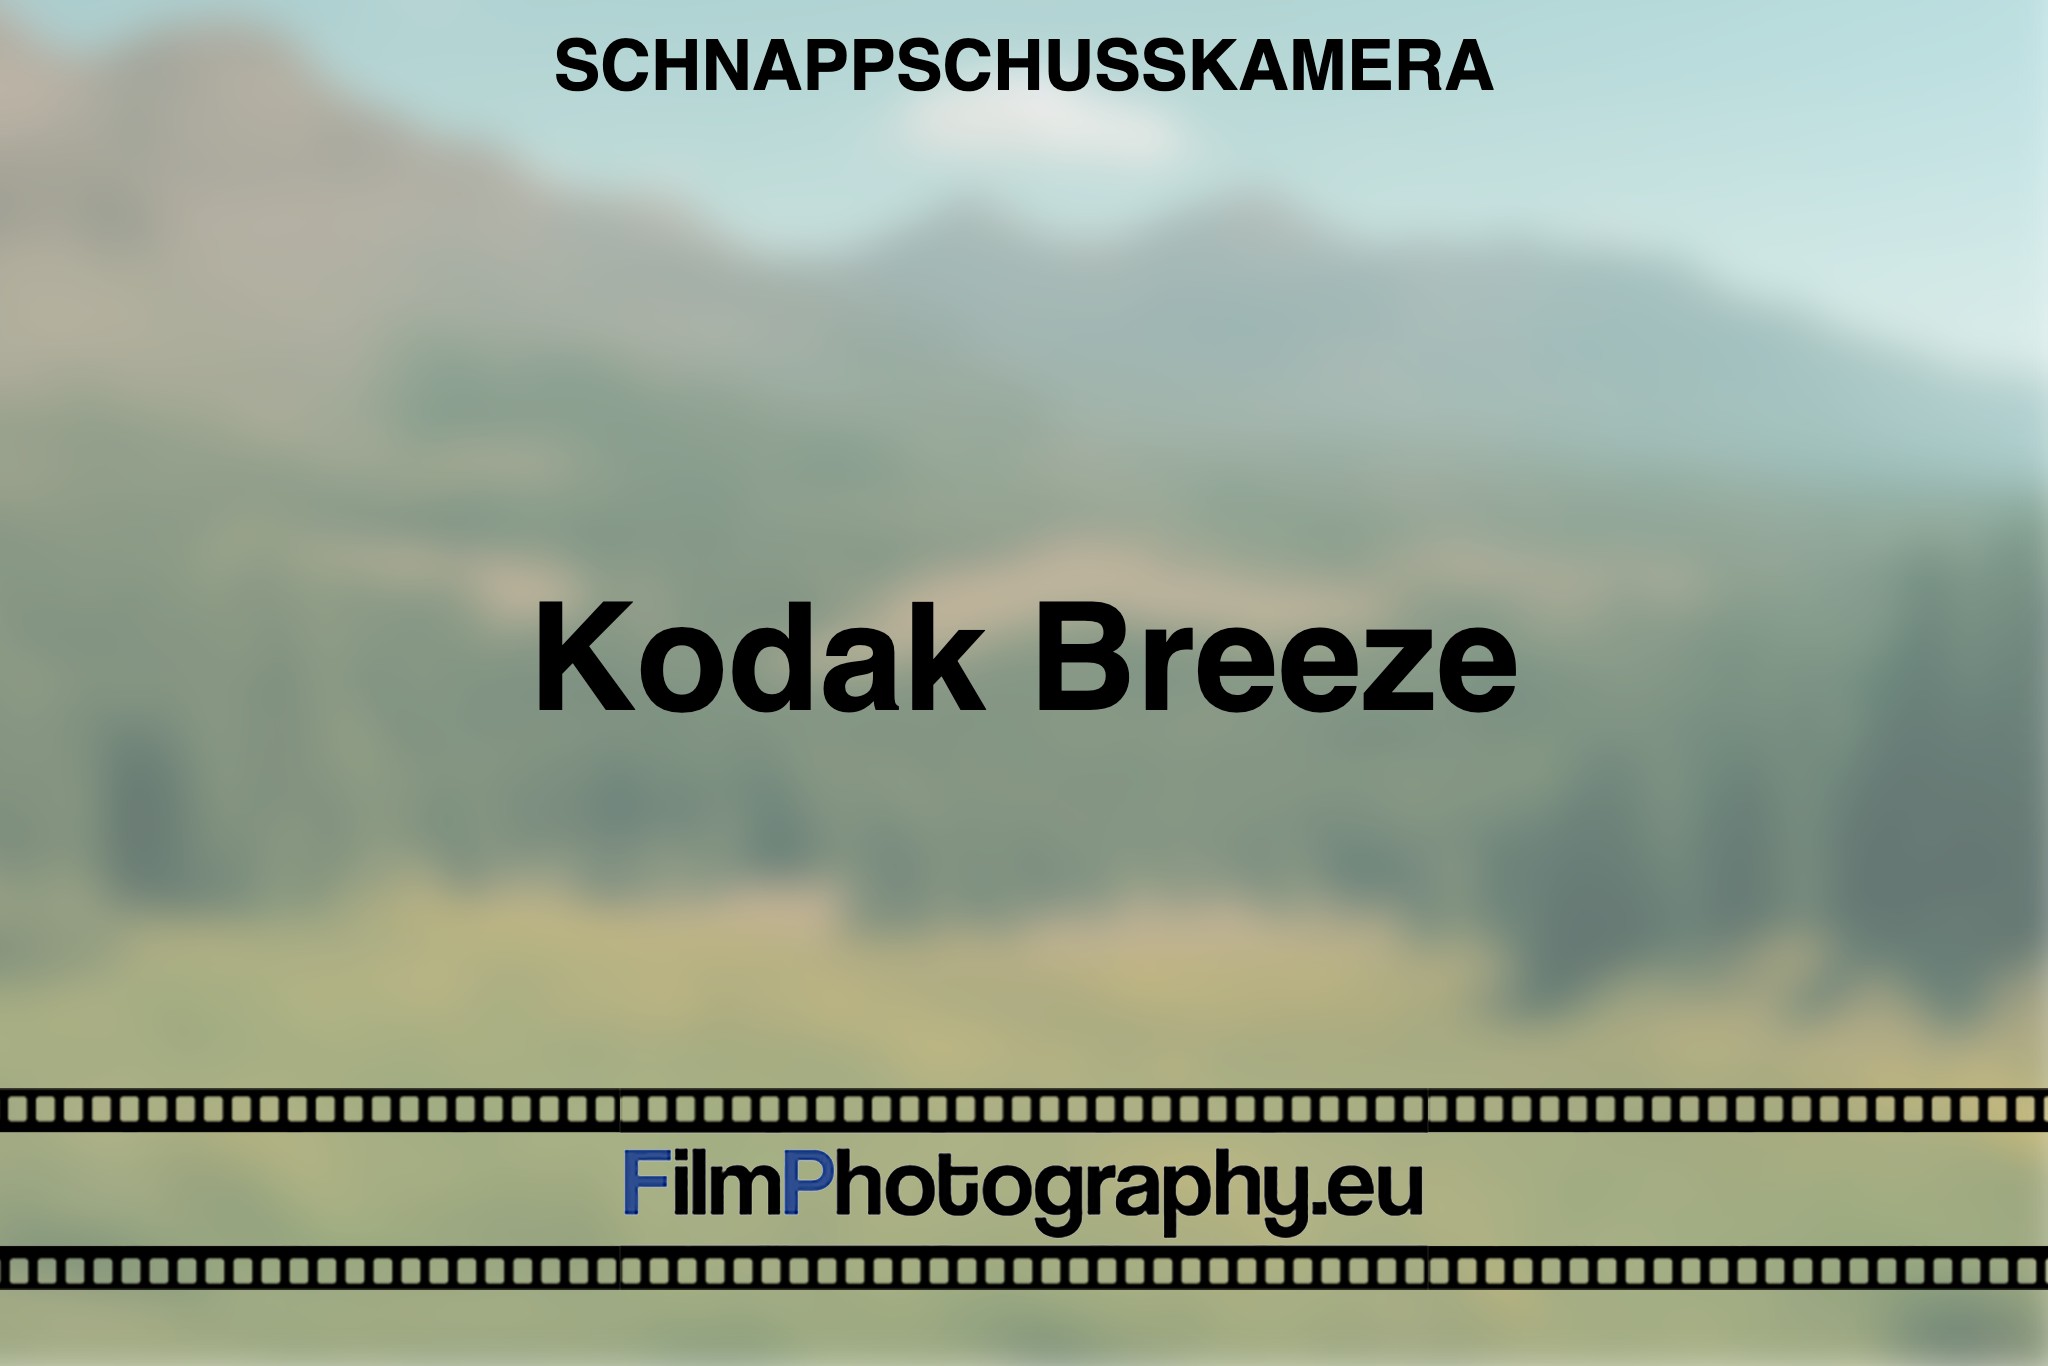 kodak-breeze-schnappschusskamera-bnv